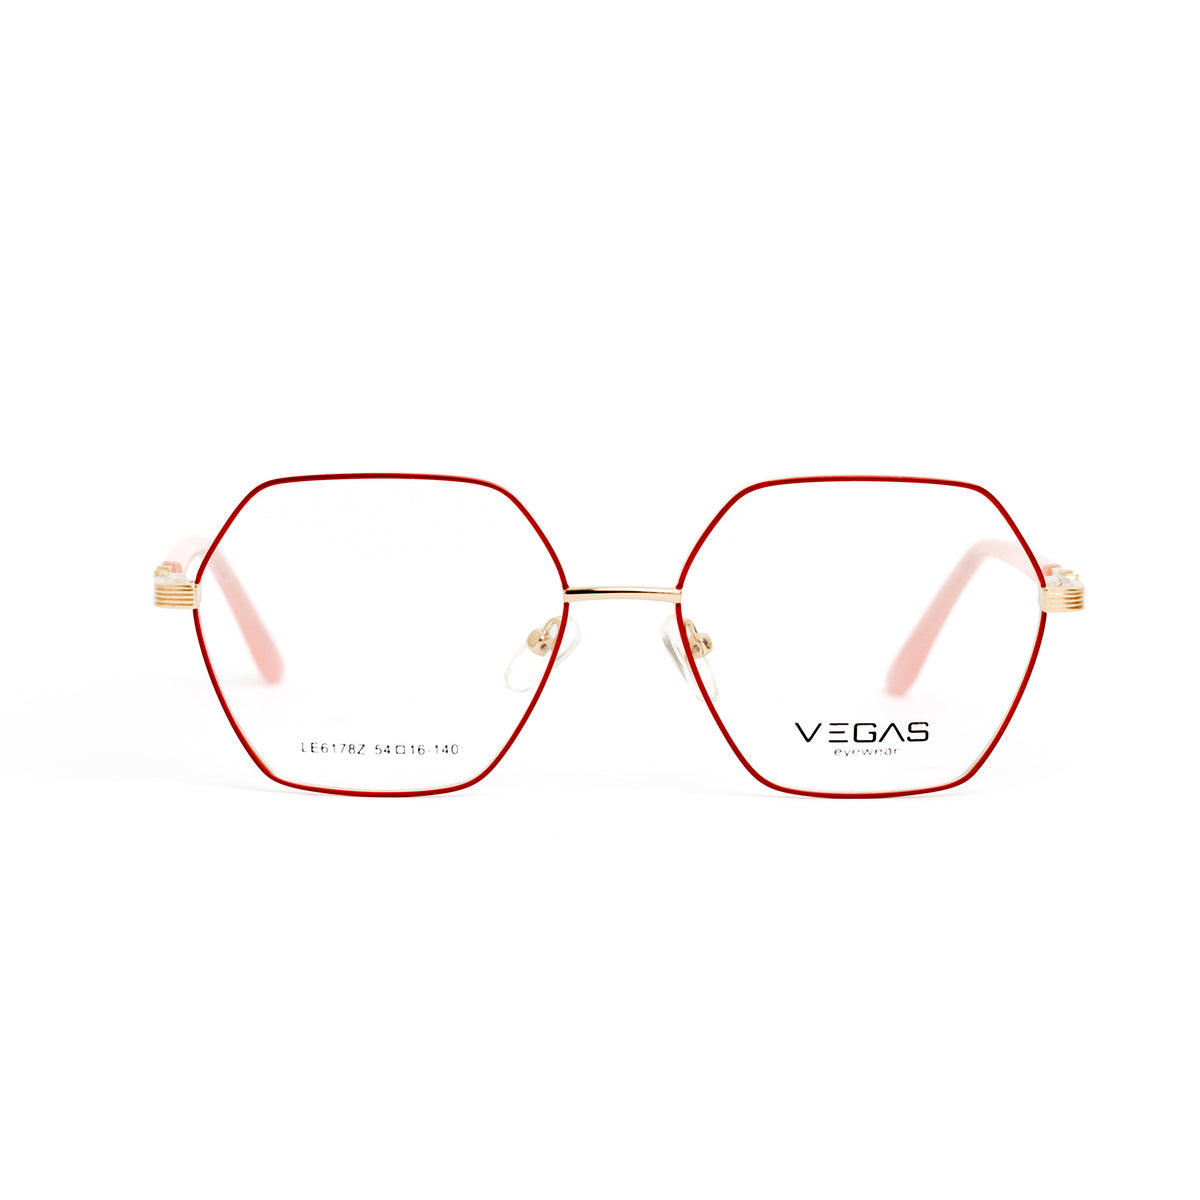 VEGAS LE6178Z - COC Eyewear